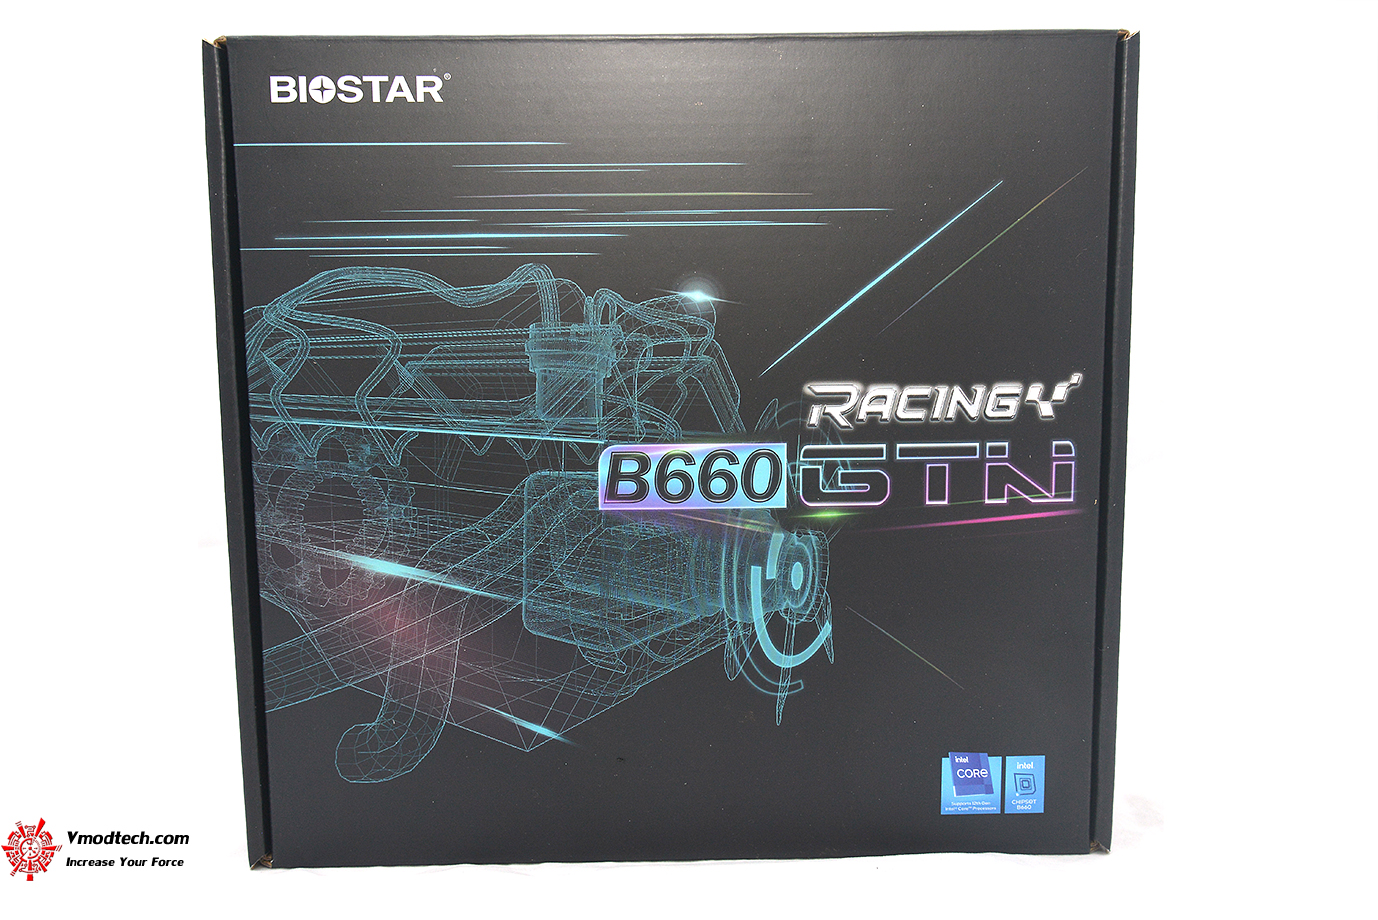 dsc 0933 BIOSTAR RACING B660 GTN REVIEW